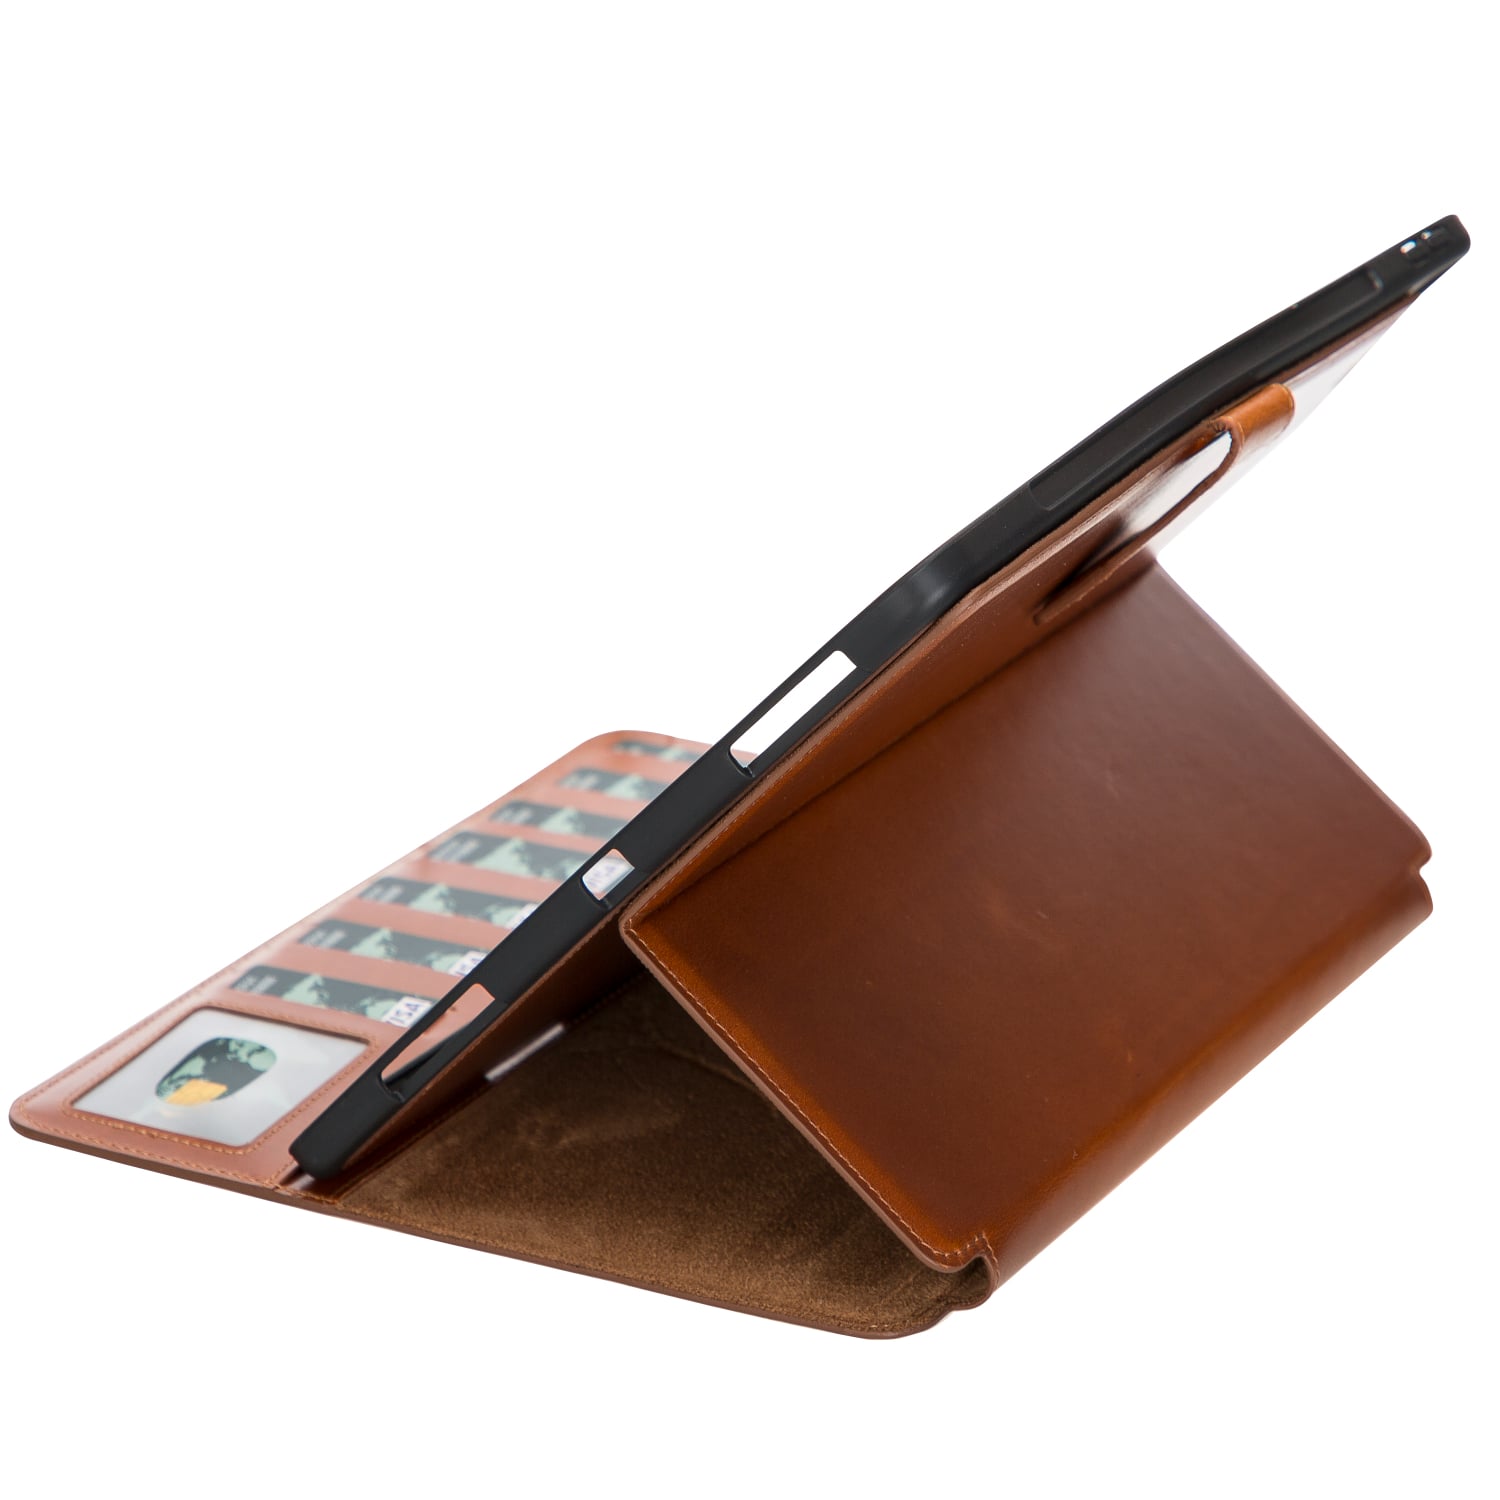 Brown Leather iPad Pro 12.9 Inc Smart Folio Case with Apple Pen Holder - Bomonti - 7